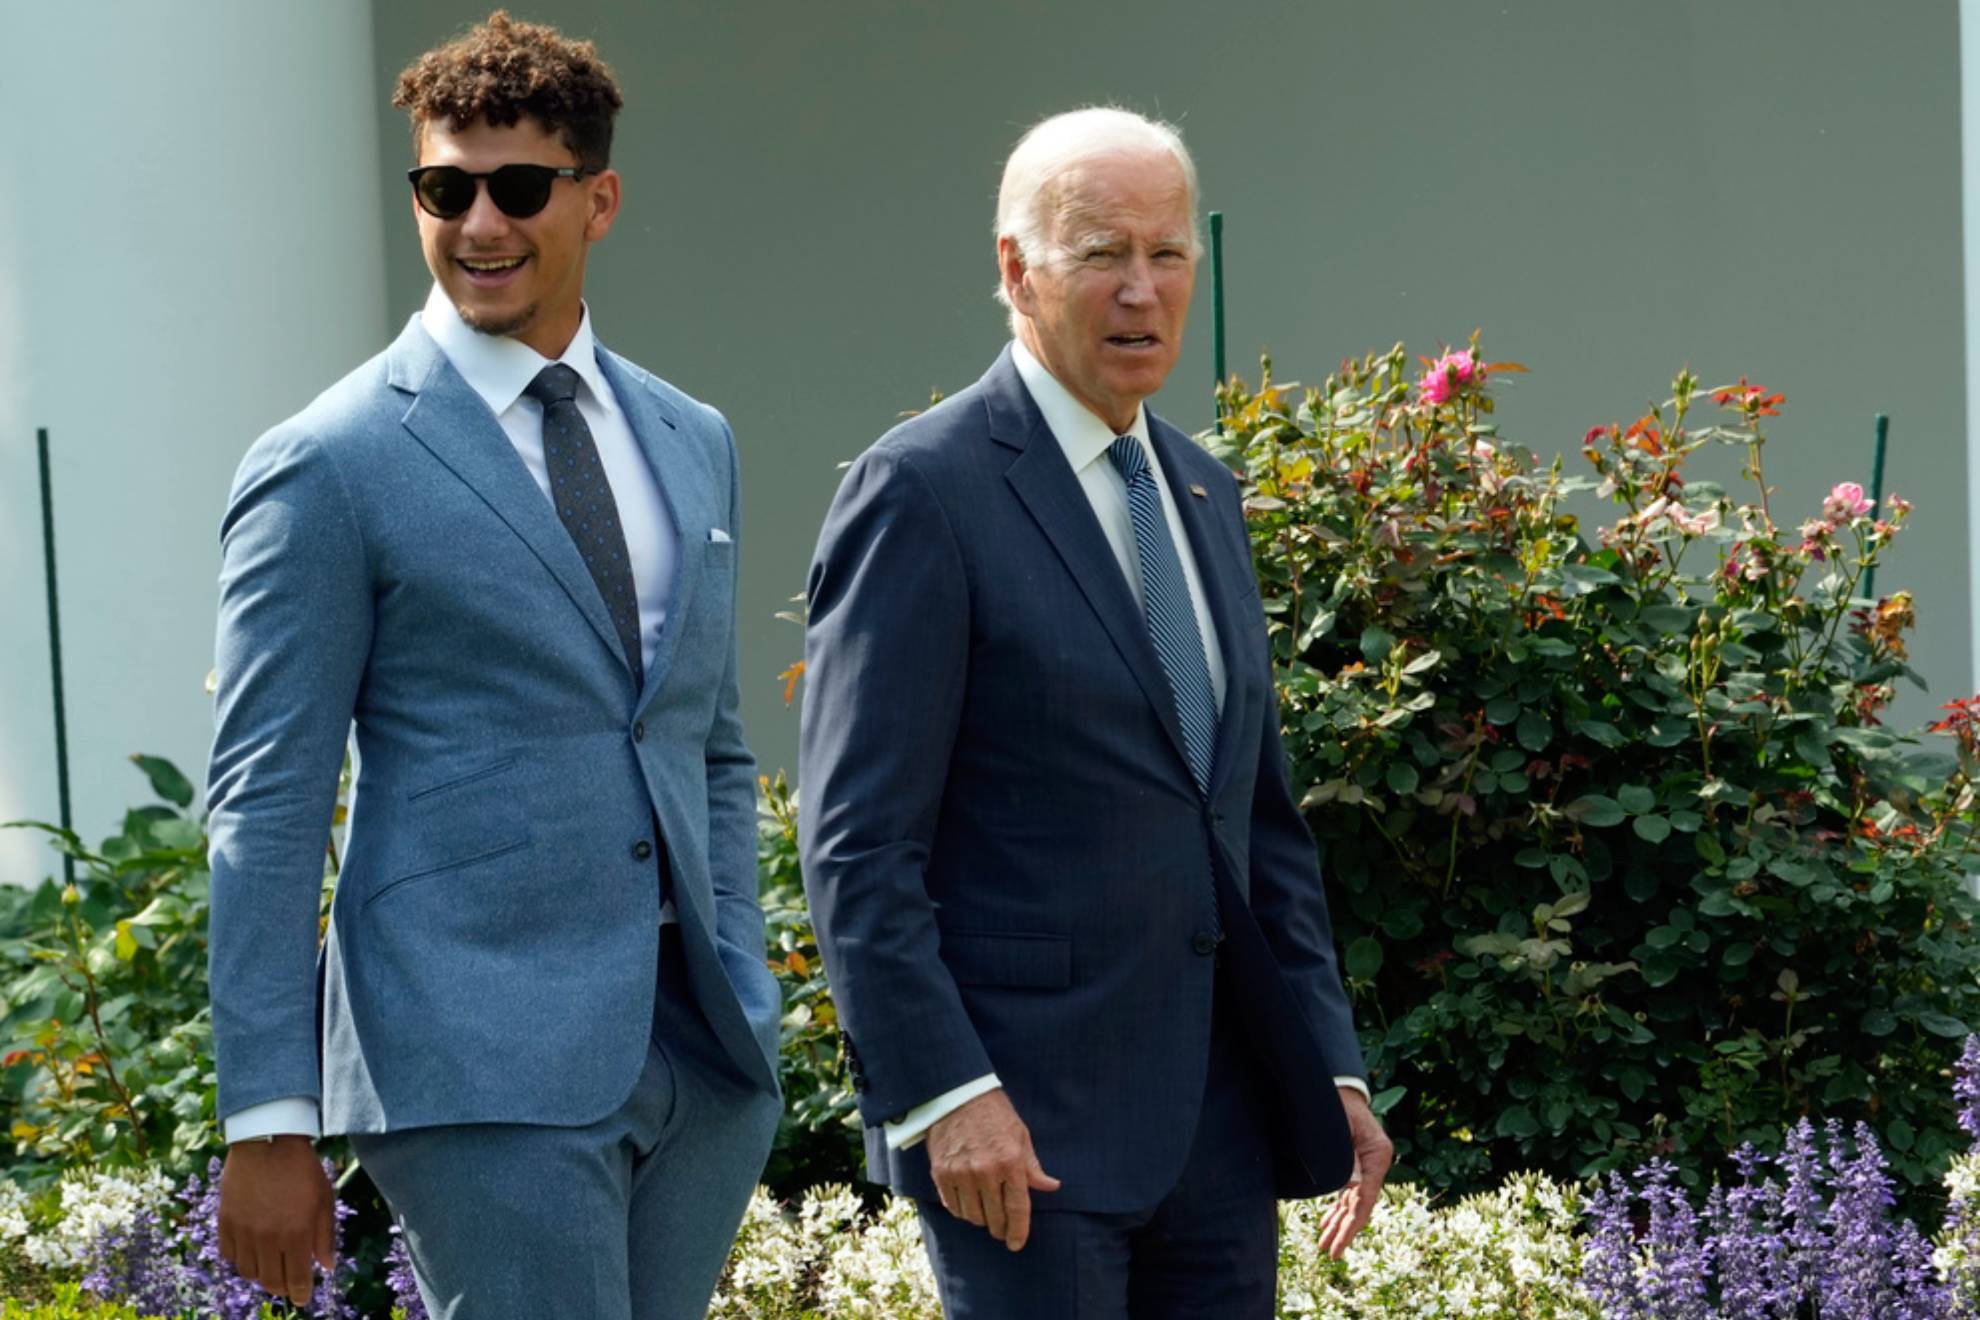 President Joe Biden walks with Kansas City Chiefs quarterback Patrick Mahomes